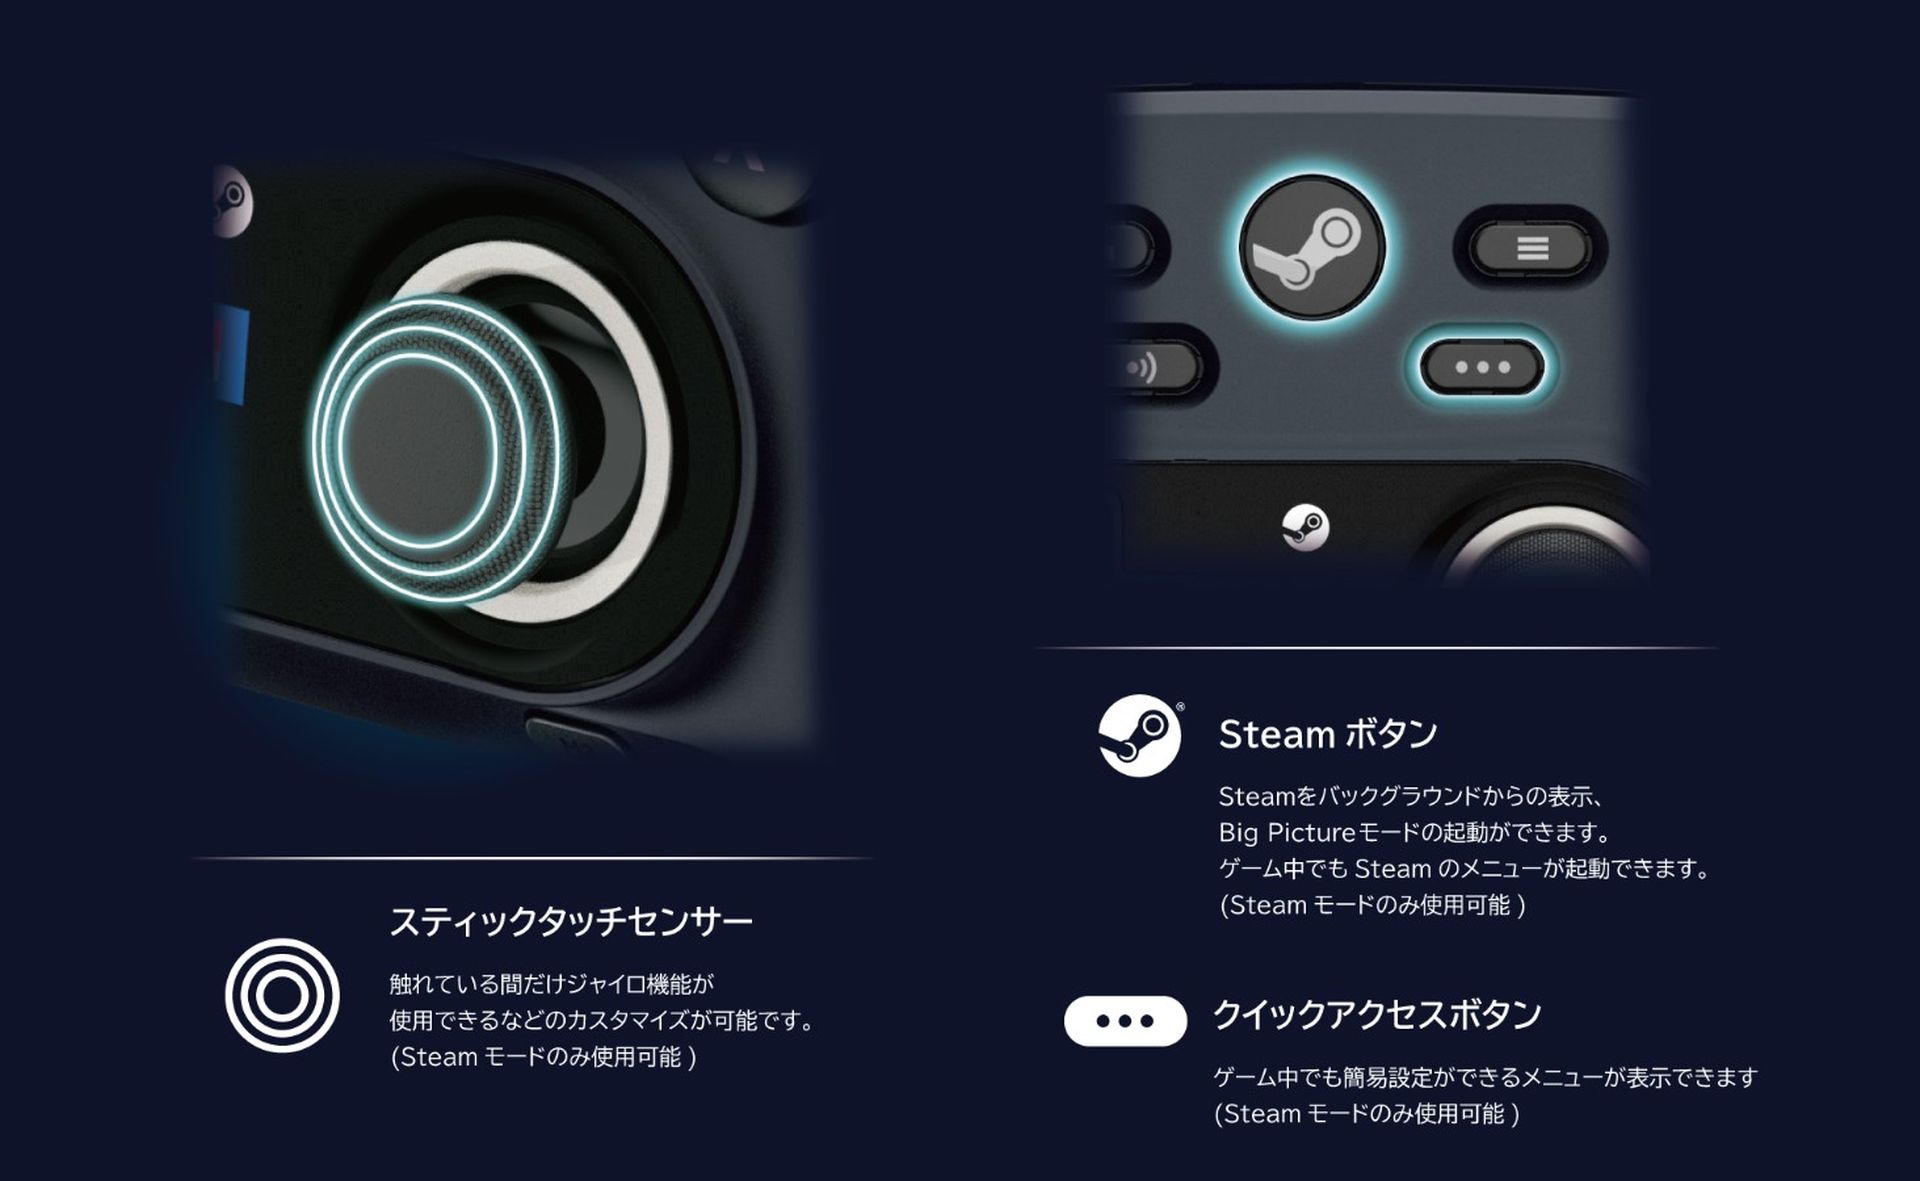 Представлен контроллер Hori Steam Controller: характеристики, цена и дата выпуска